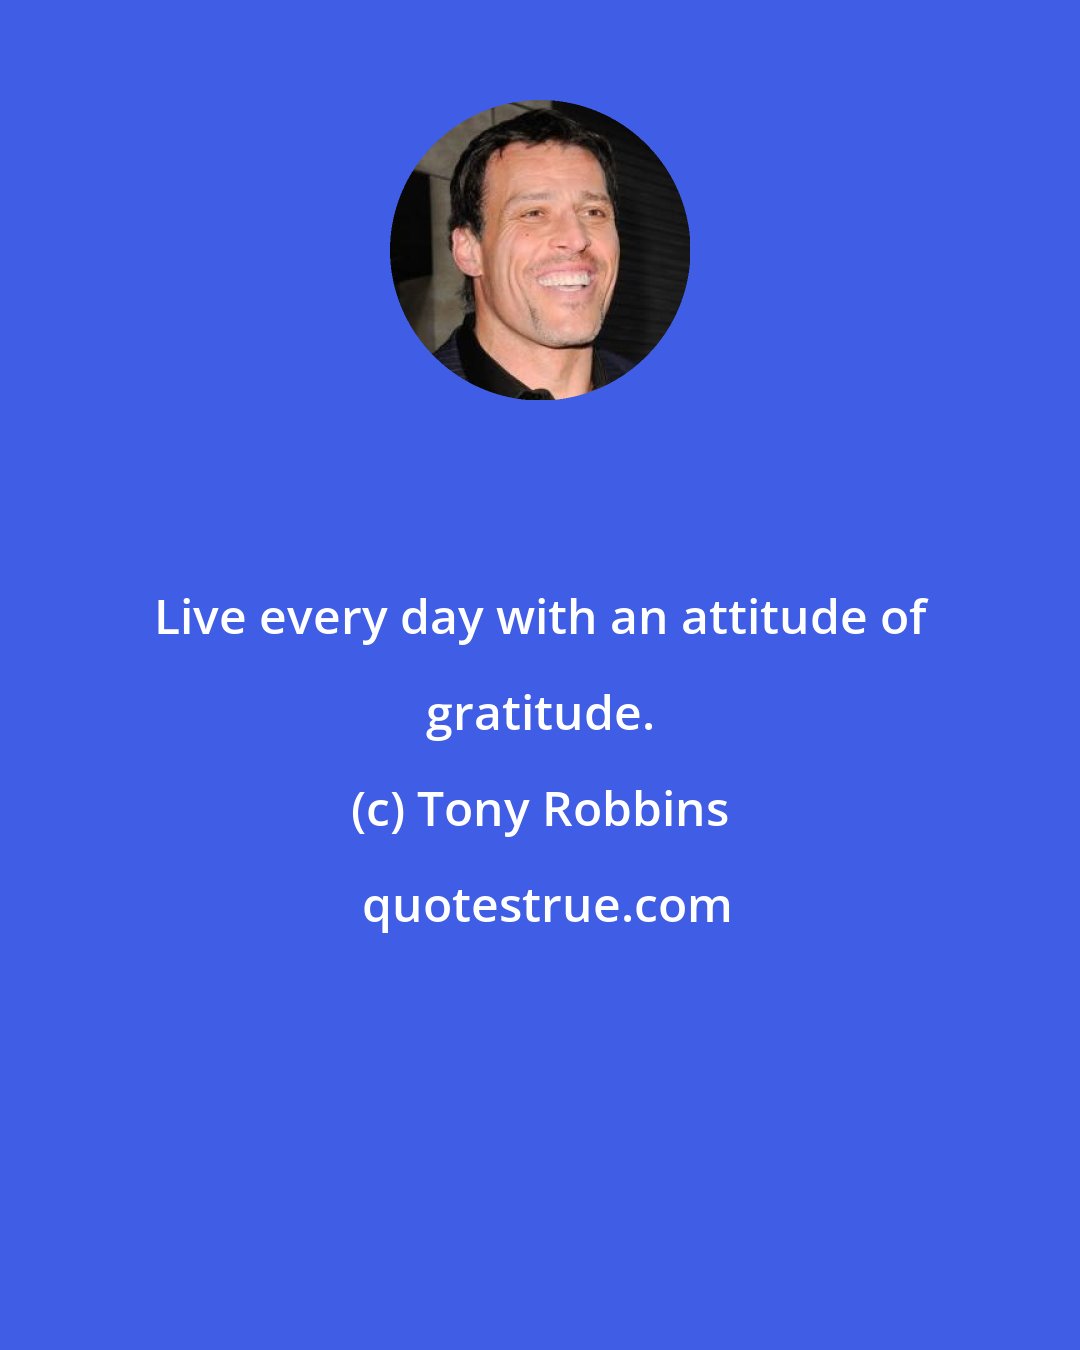 Tony Robbins: Live every day with an attitude of gratitude.